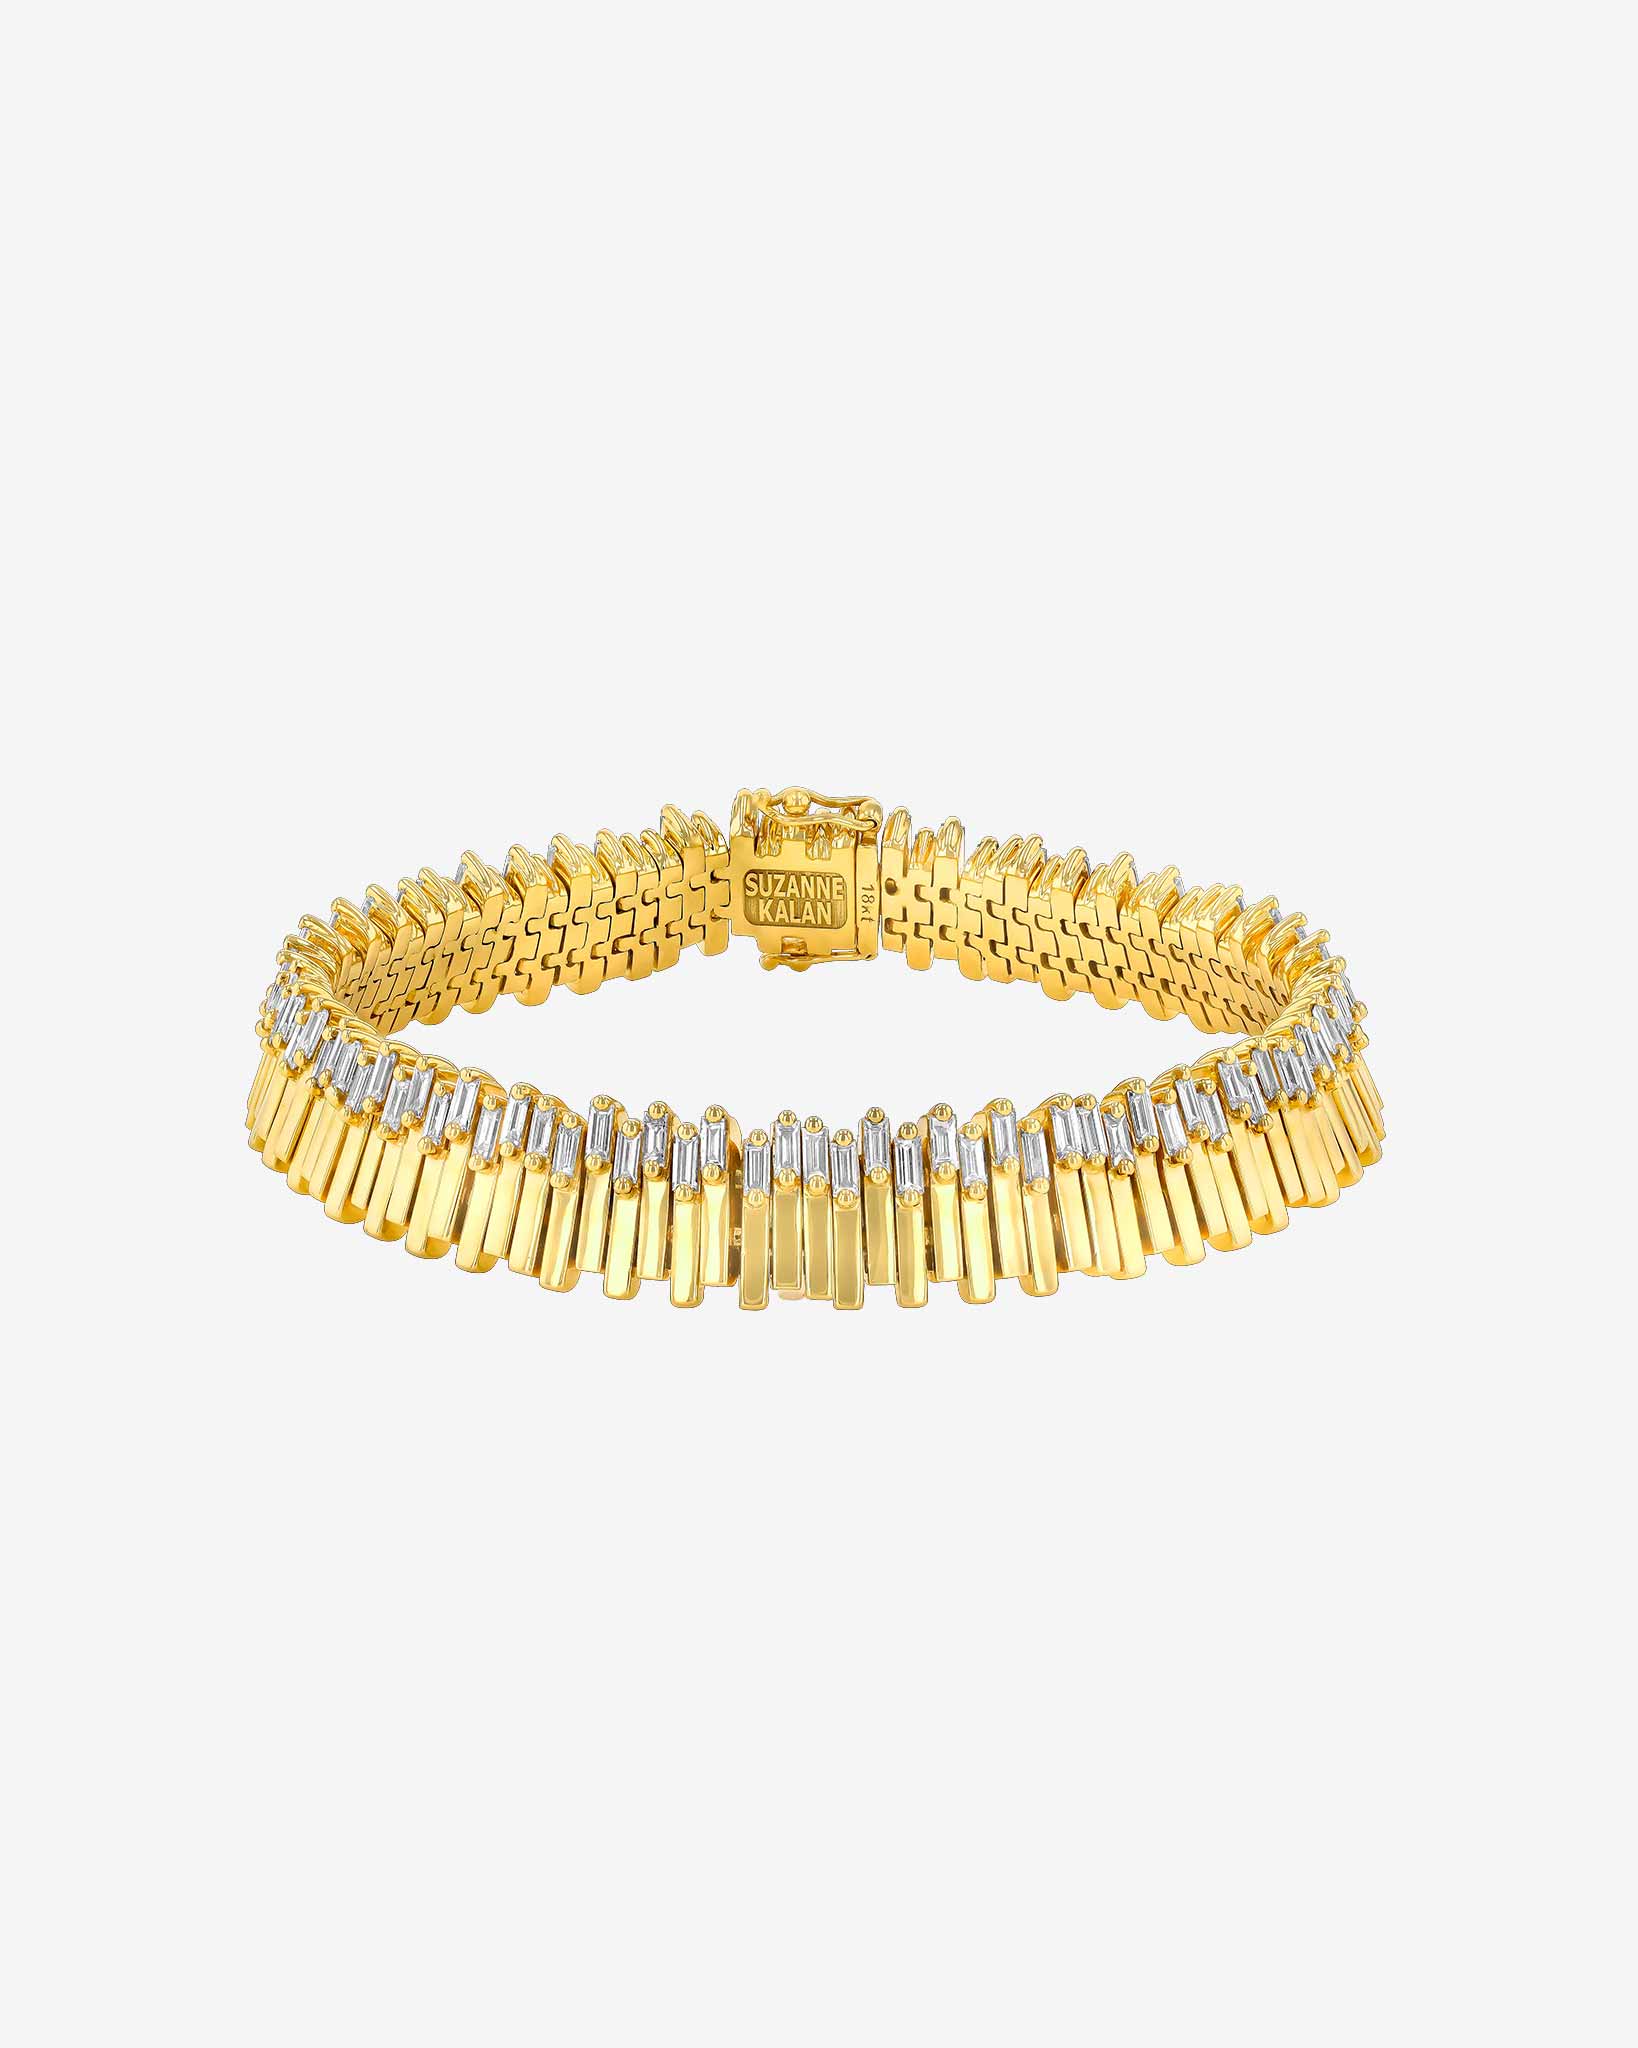 Suzanne Kalan Golden Stacker Diamond Tennis Bracelet in 18k yellow gold